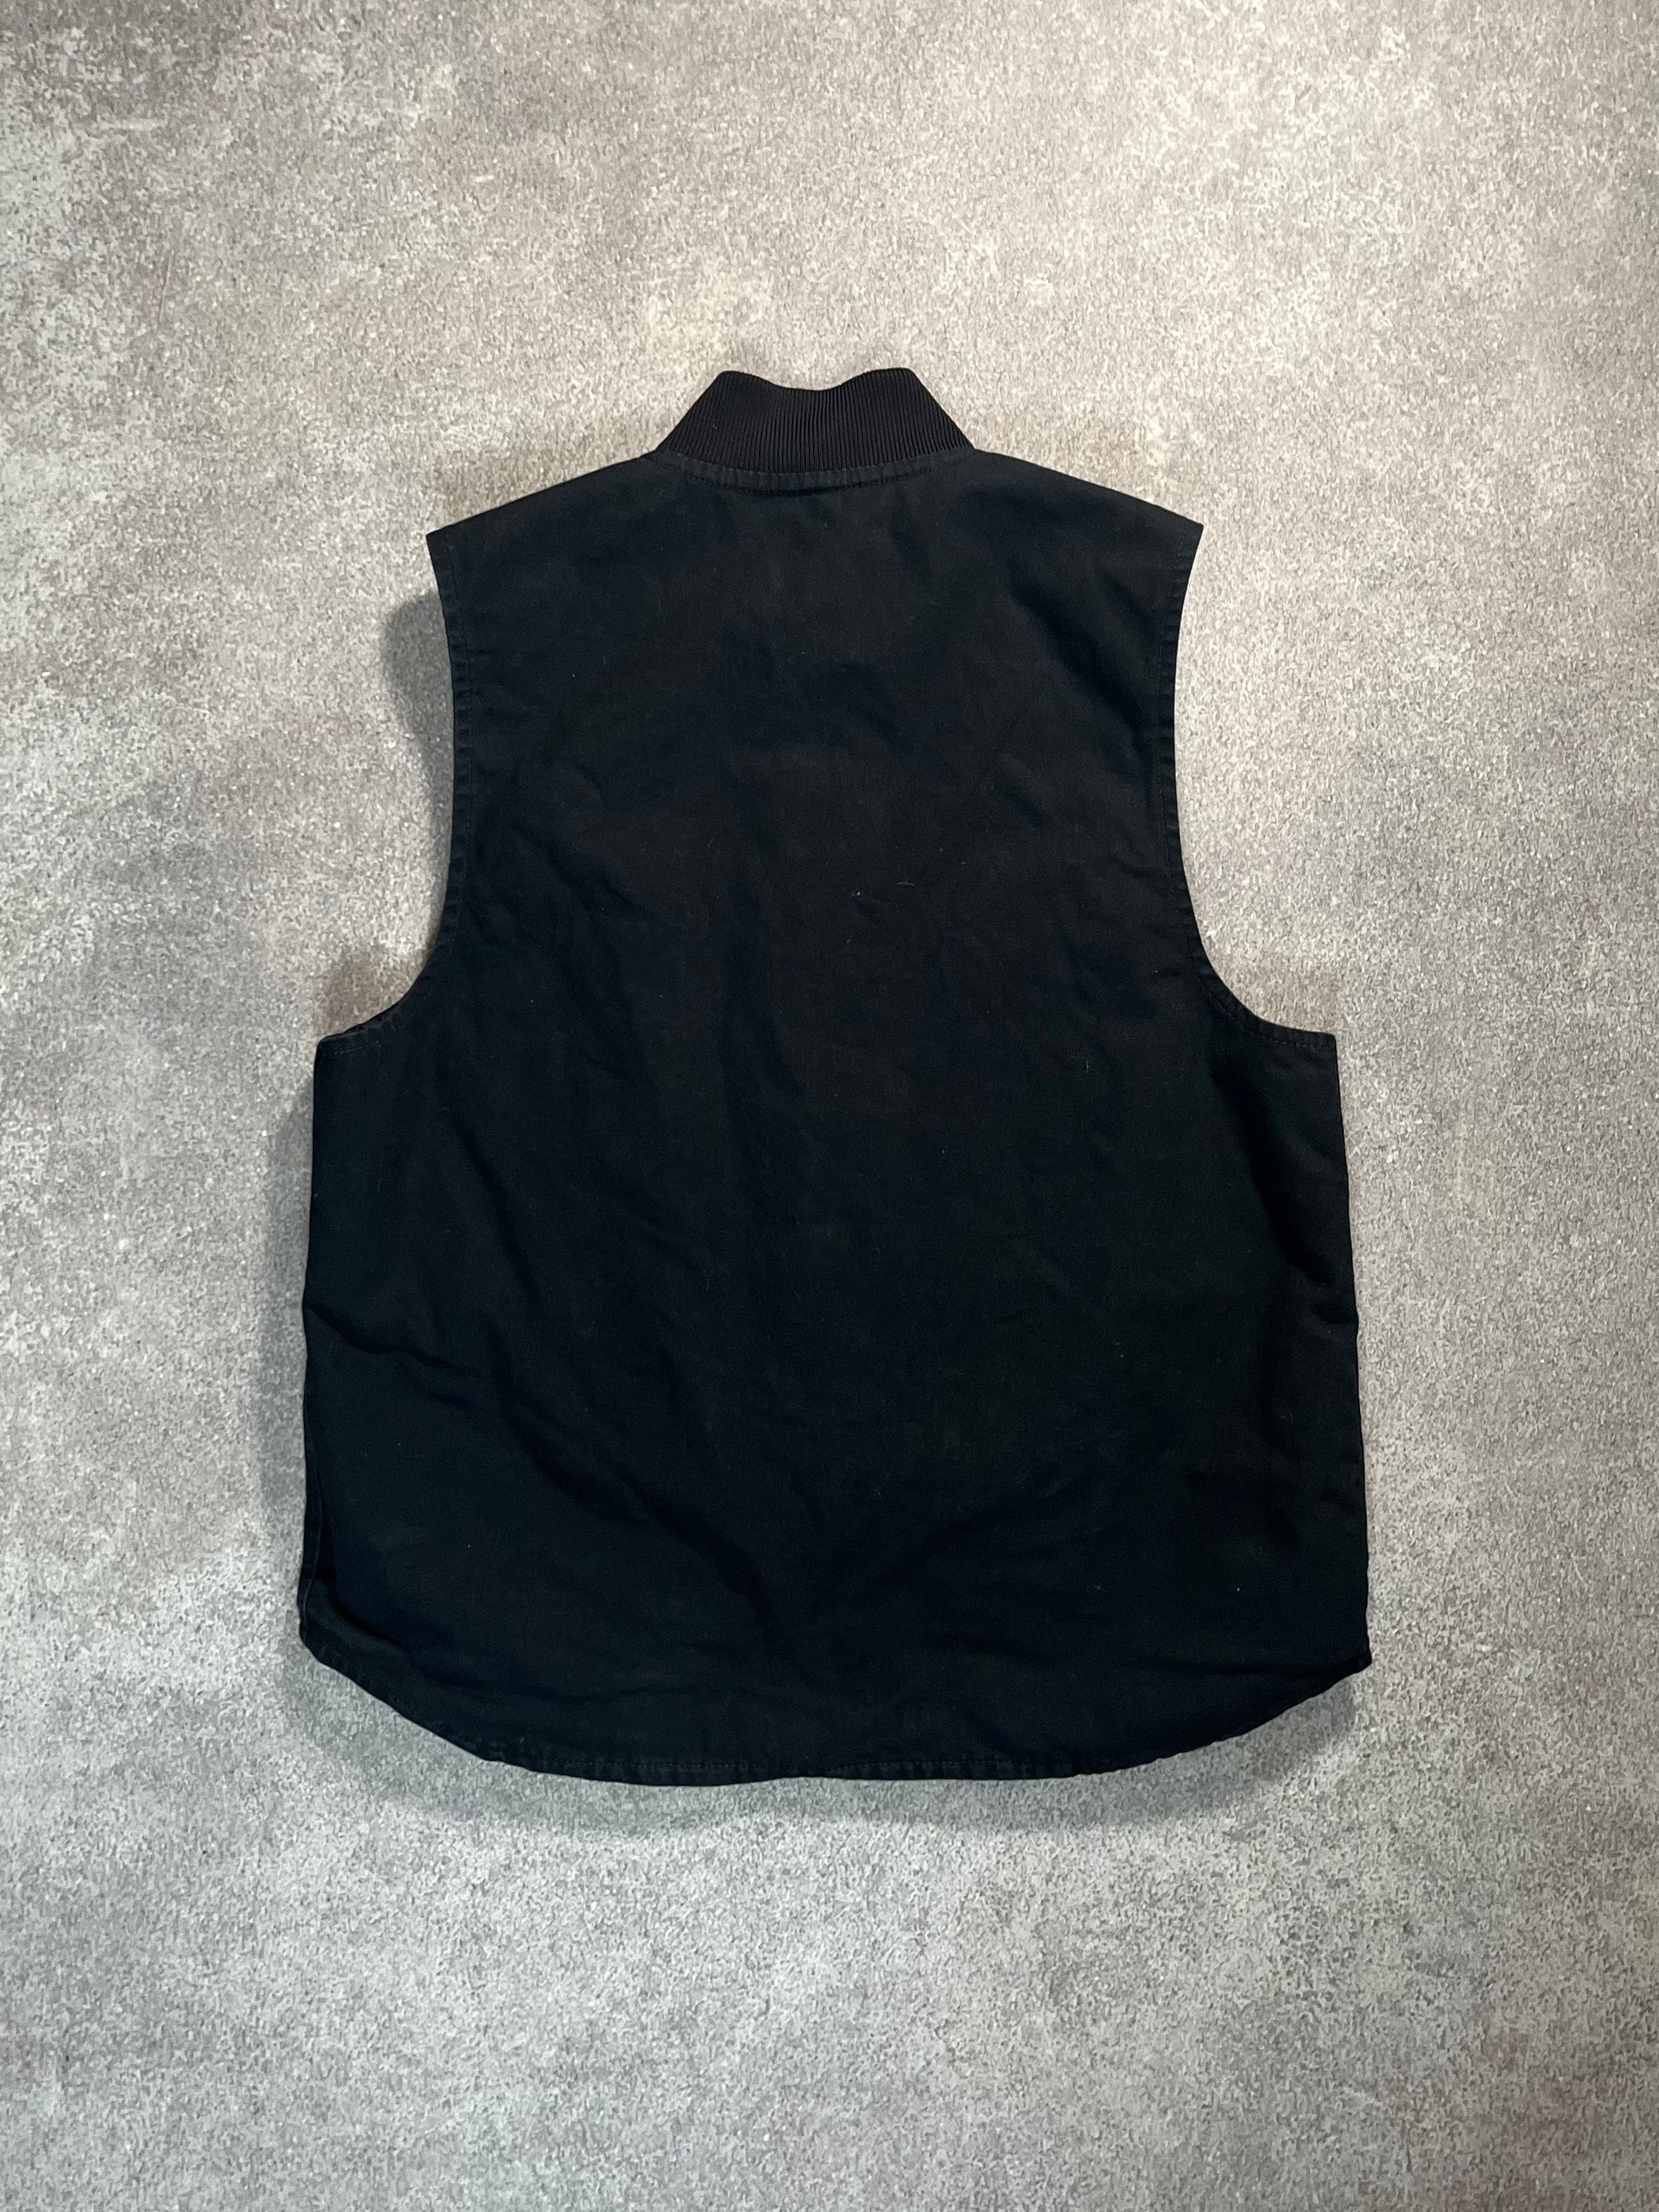 Carhartt Canvas Vest Black // Medium - RHAGHOUSE VINTAGE